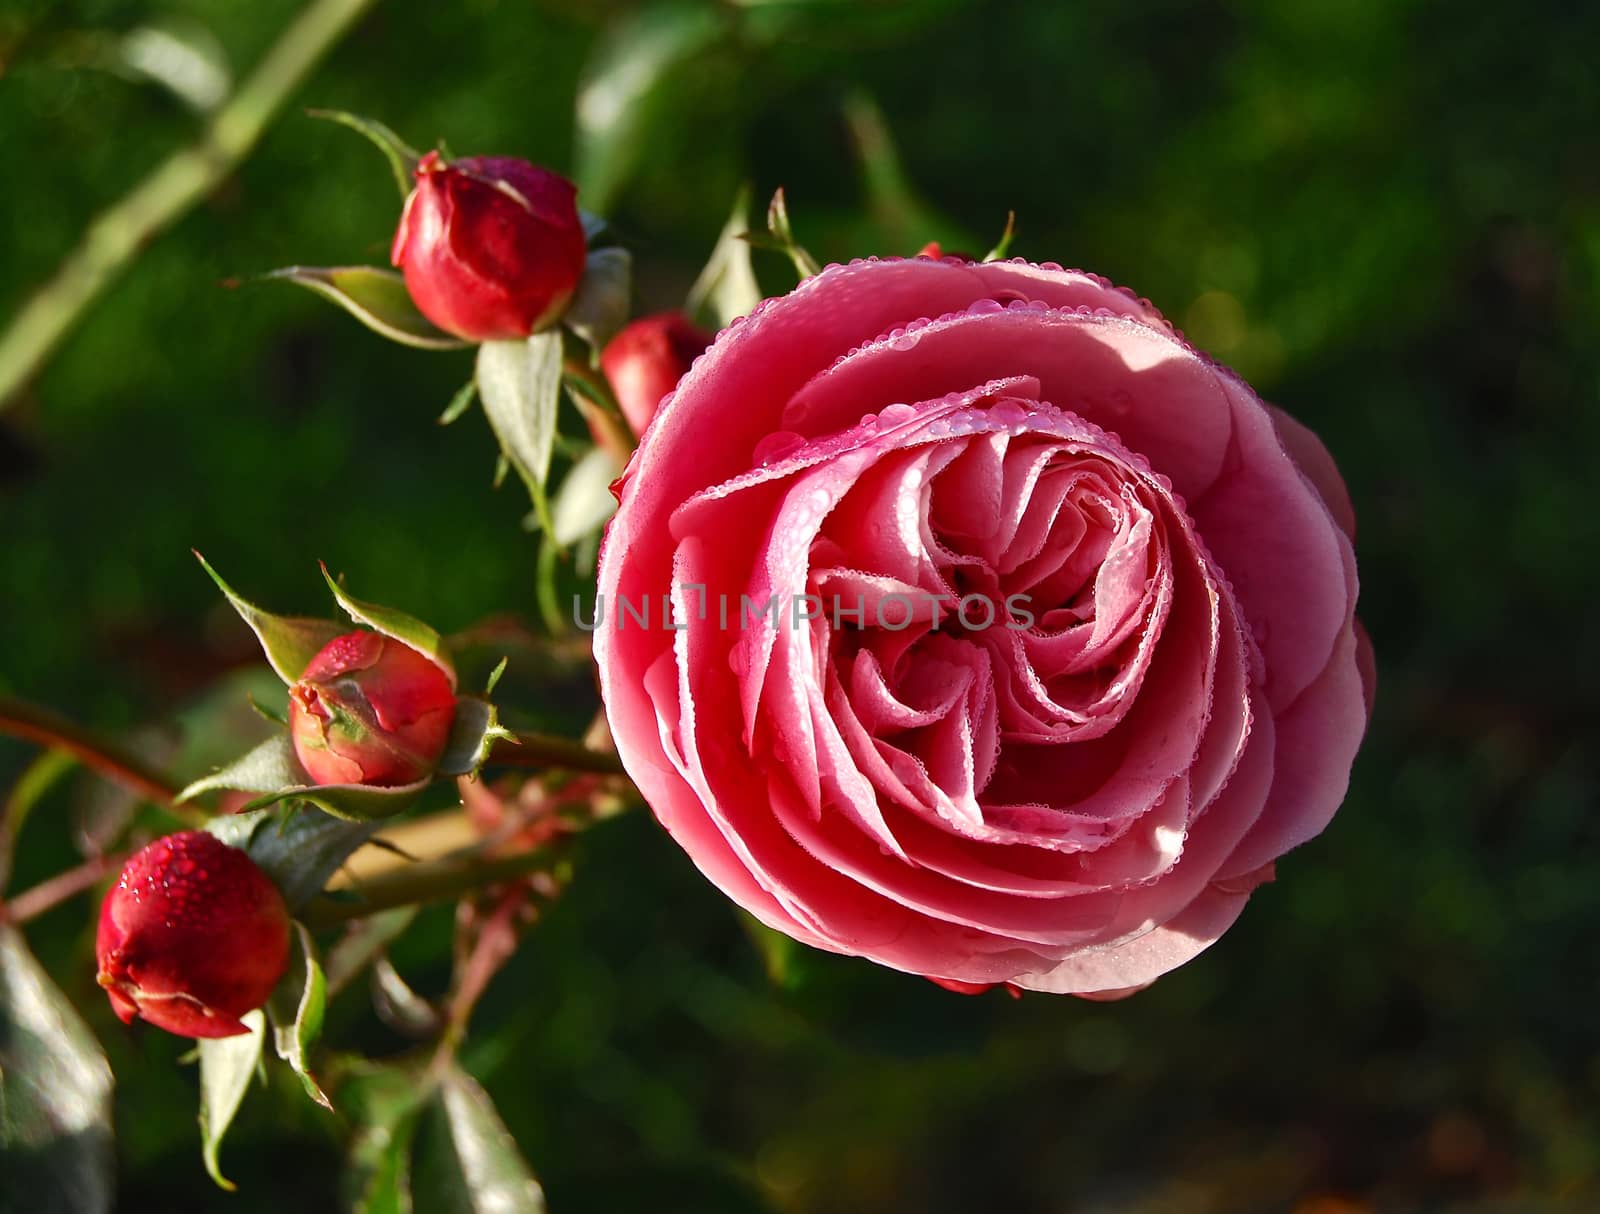 Rose with rosebuds, closeup